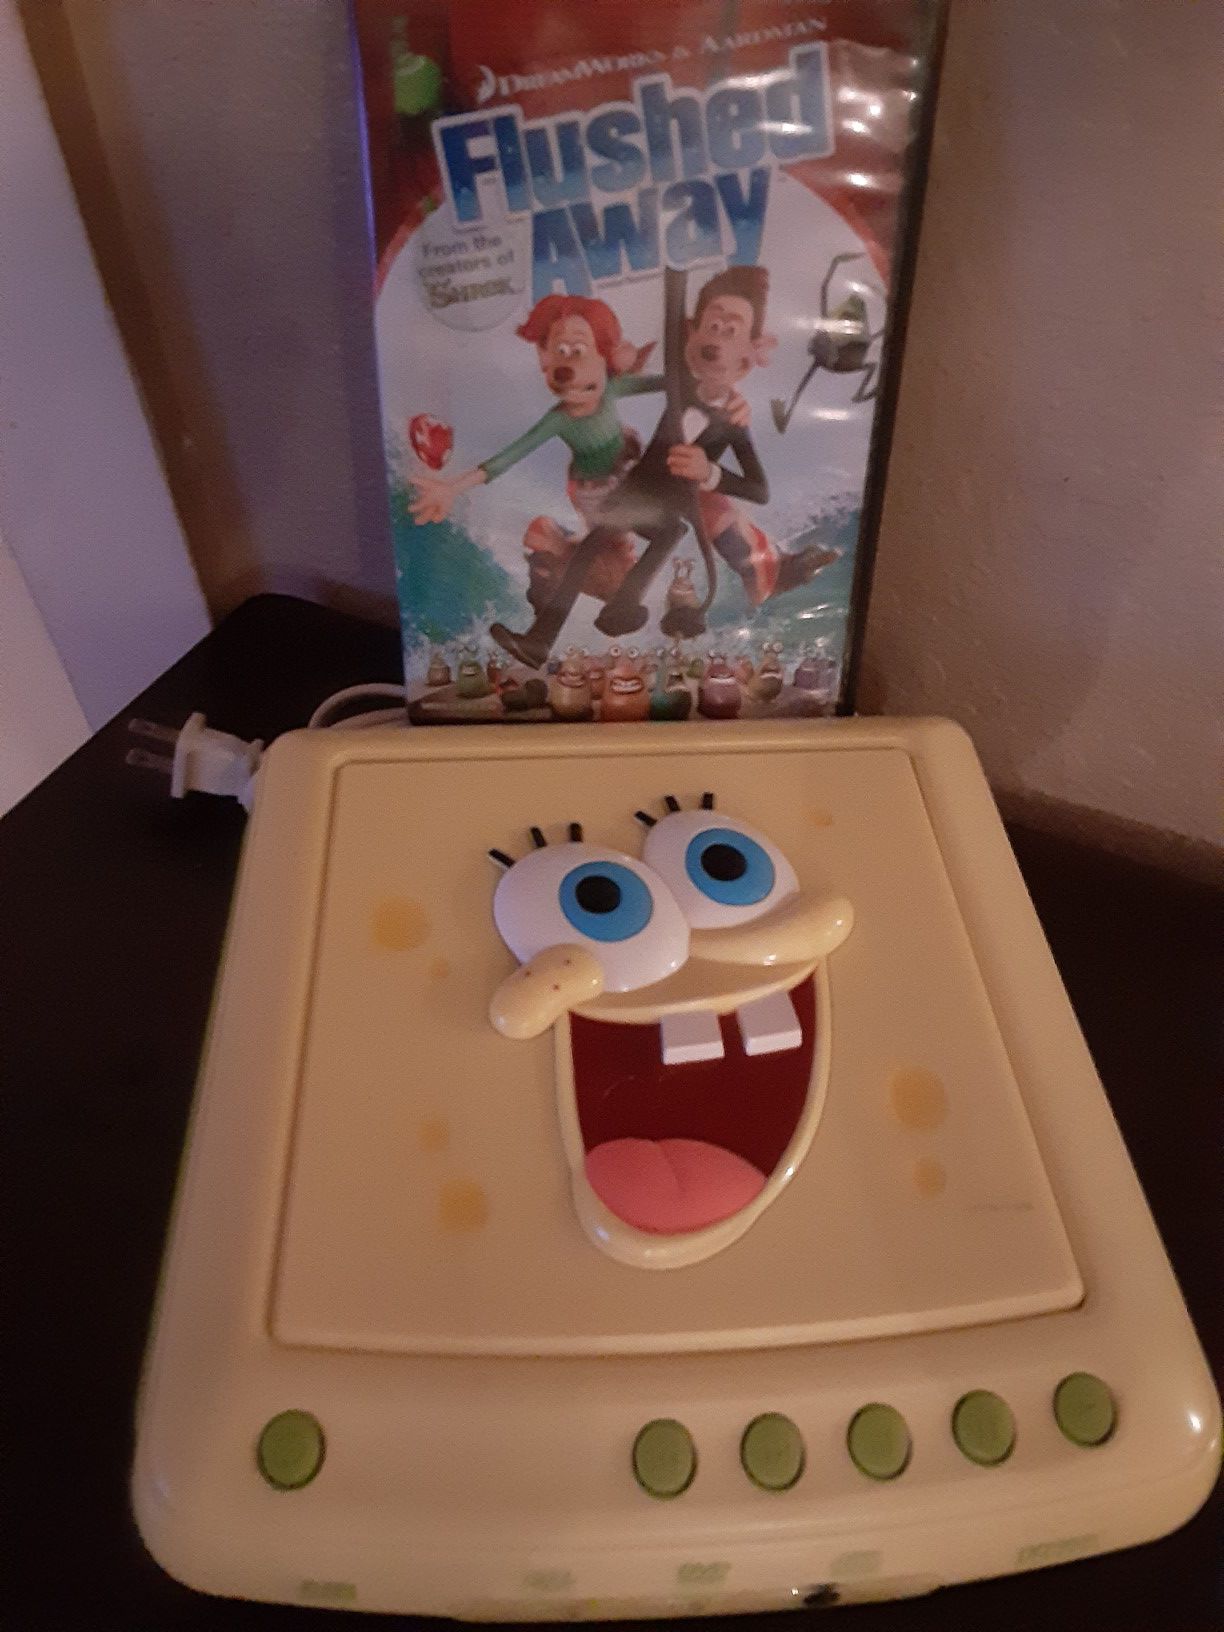 SpongeBob DVD players w/spongebob remote